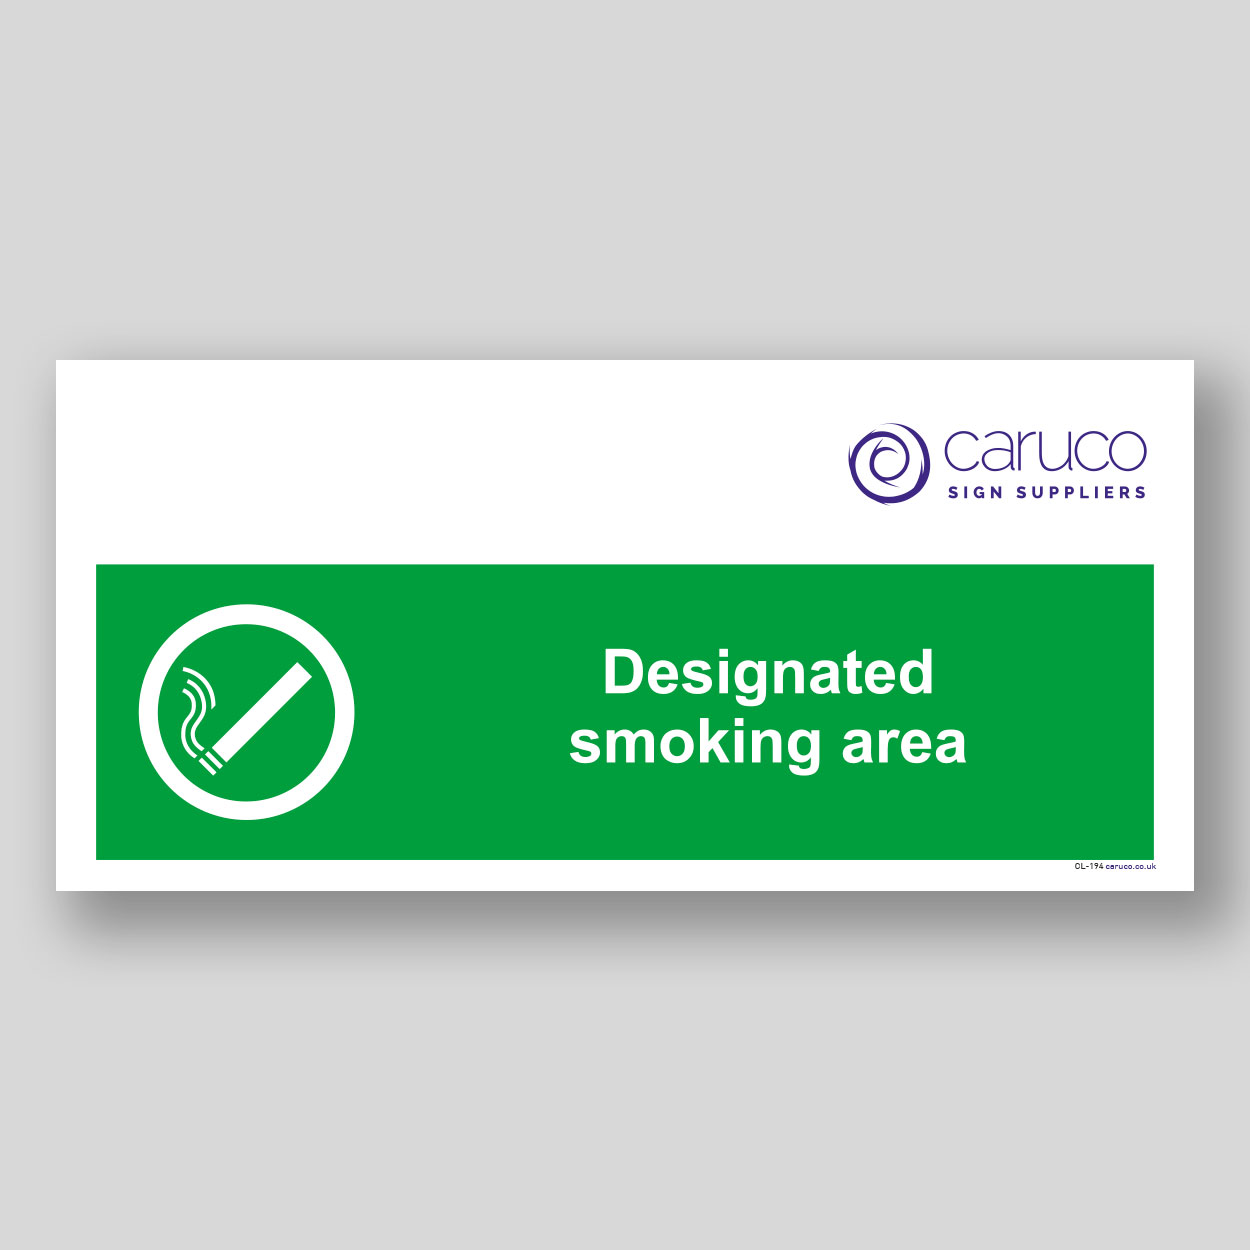 CL-194 Designated smoking area